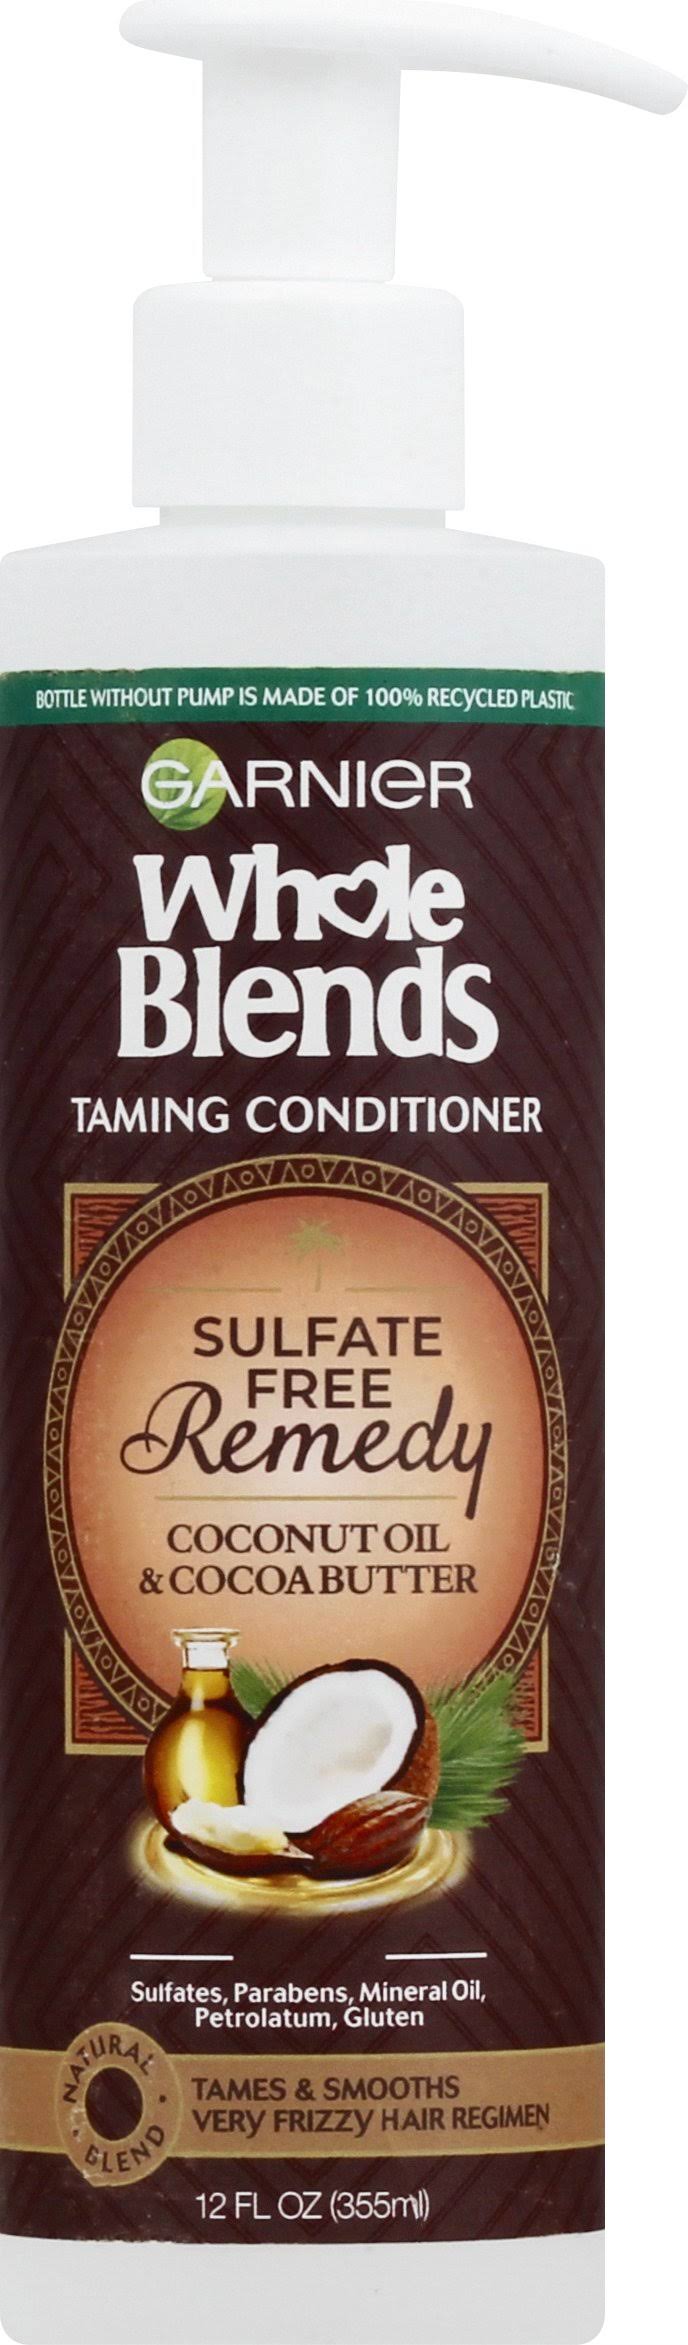 Whole Blends Sulfate-Free Coconut Oil & Cocoa Butter Conditioner